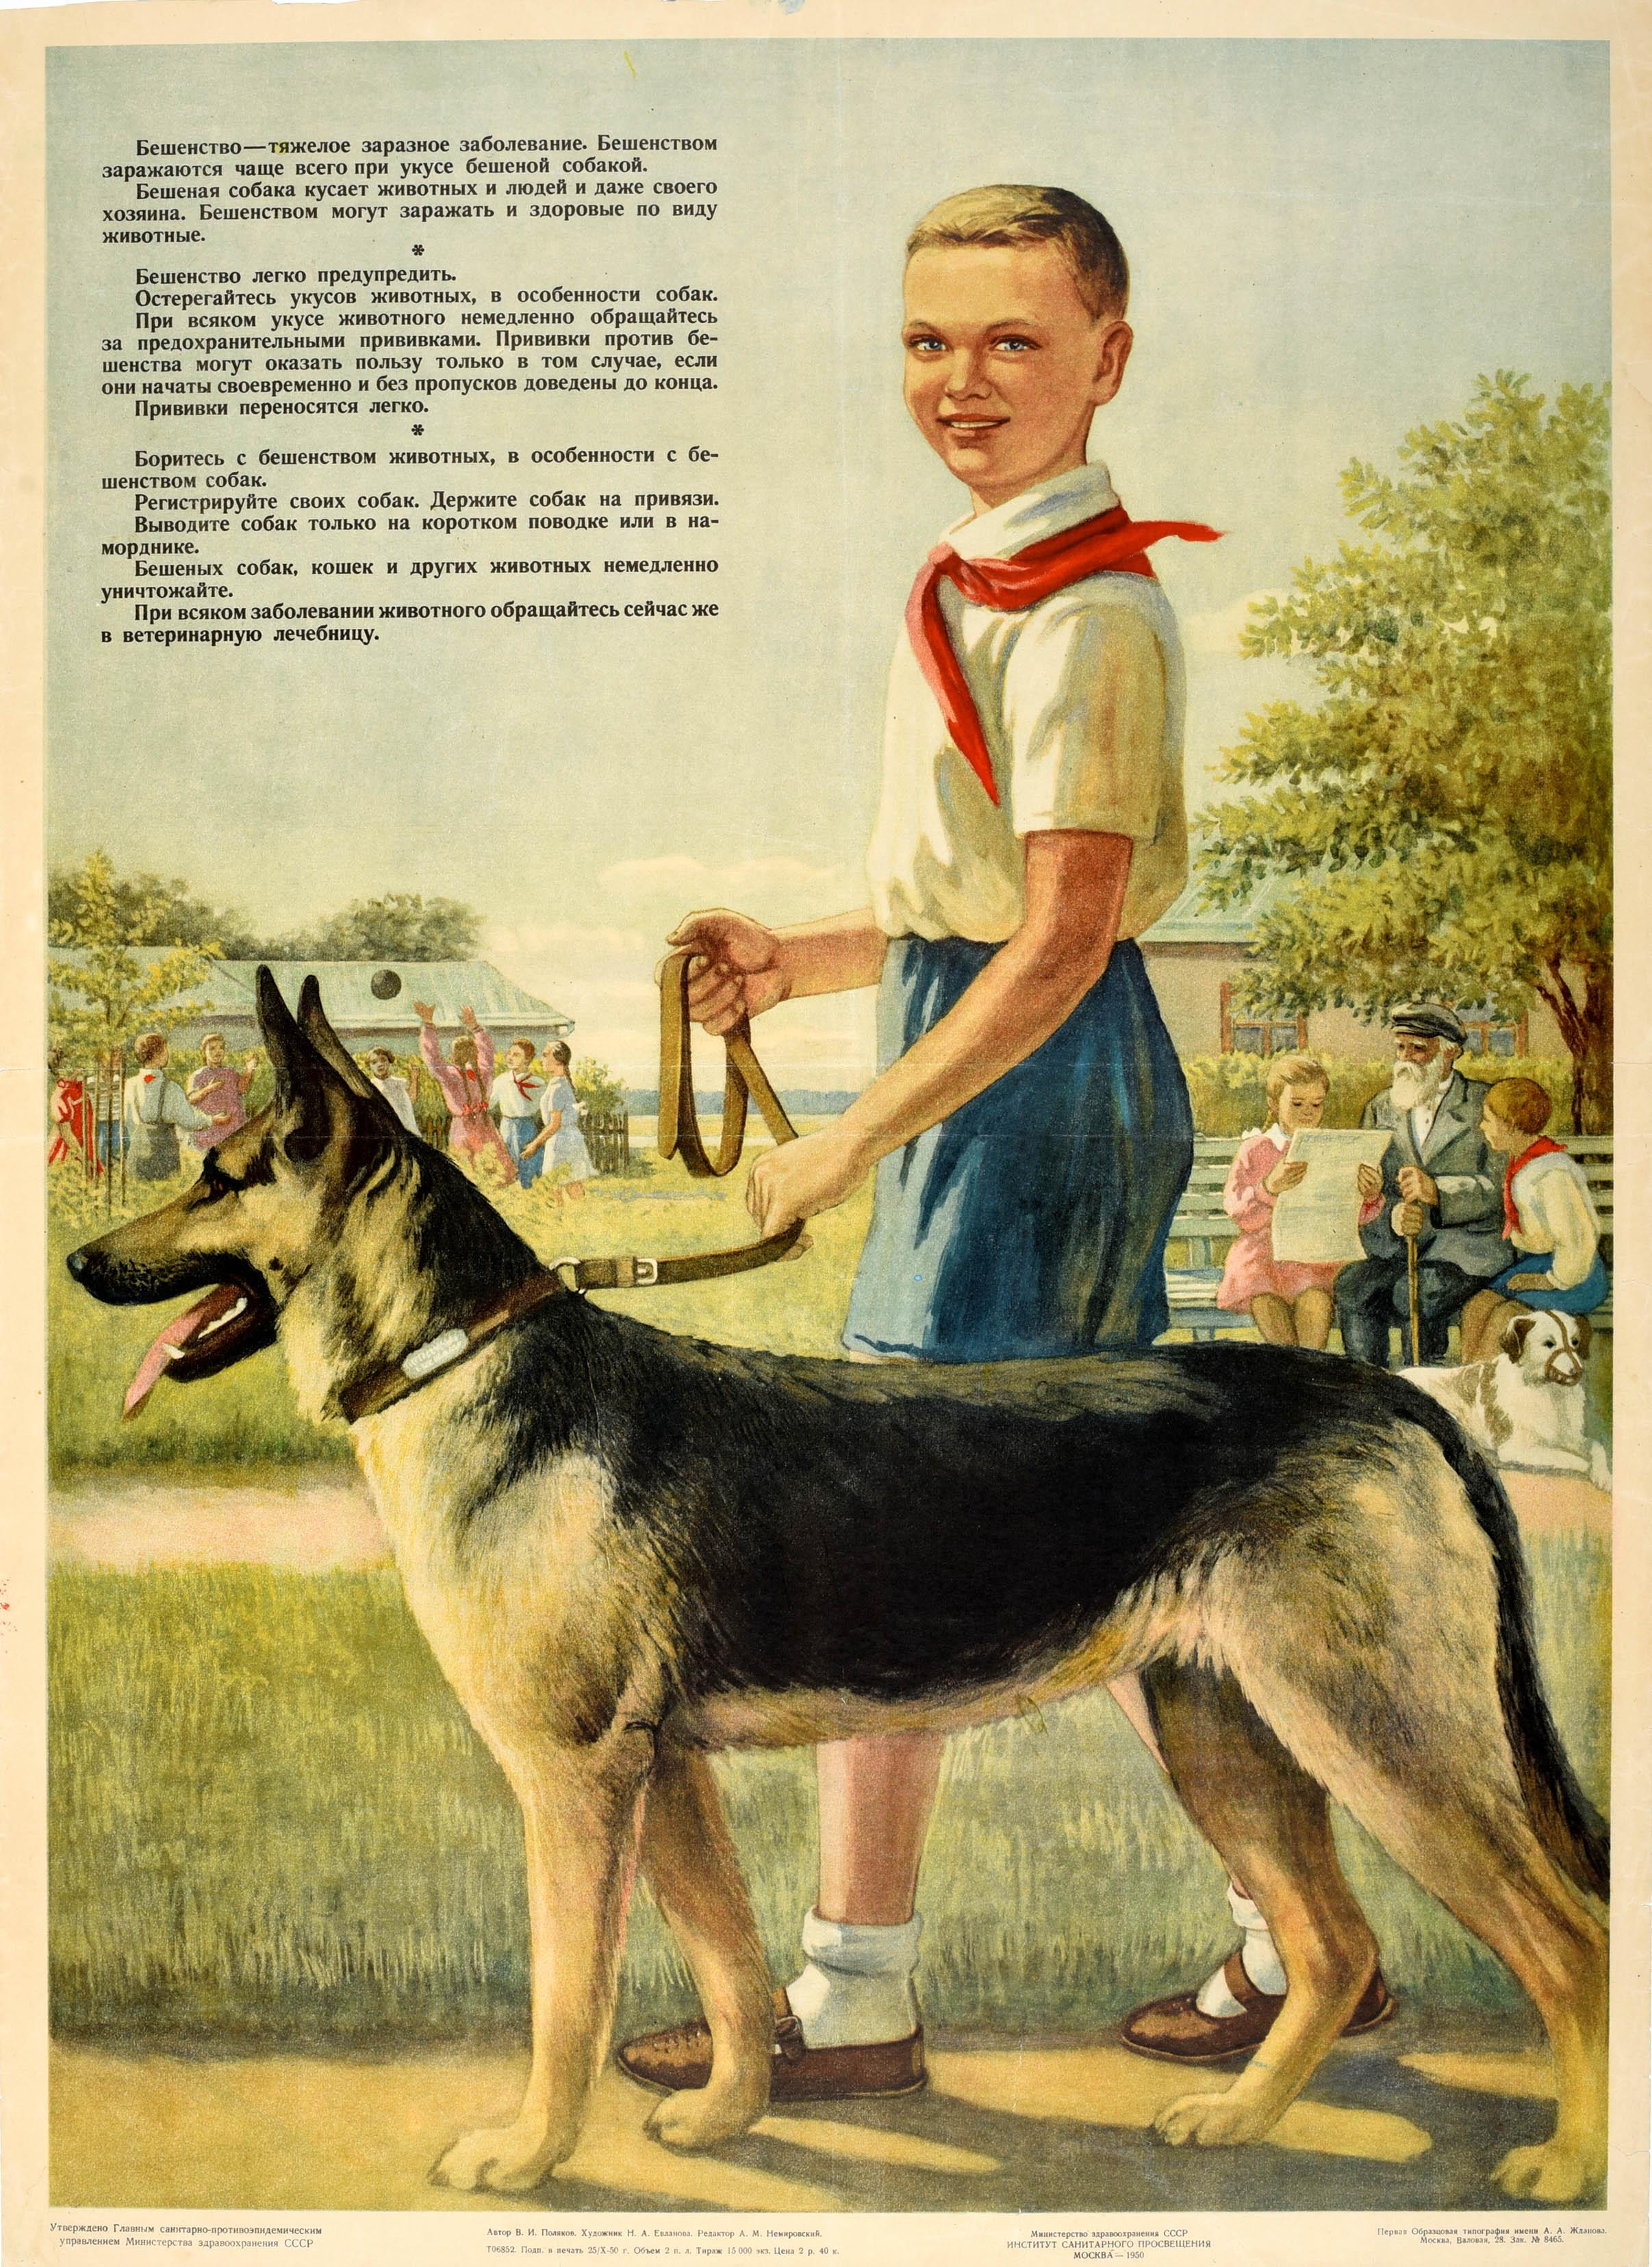 Evlanova Print - Original Vintage Public Health Poster Rabies Prevention In Dogs USSR Pioneer Boy